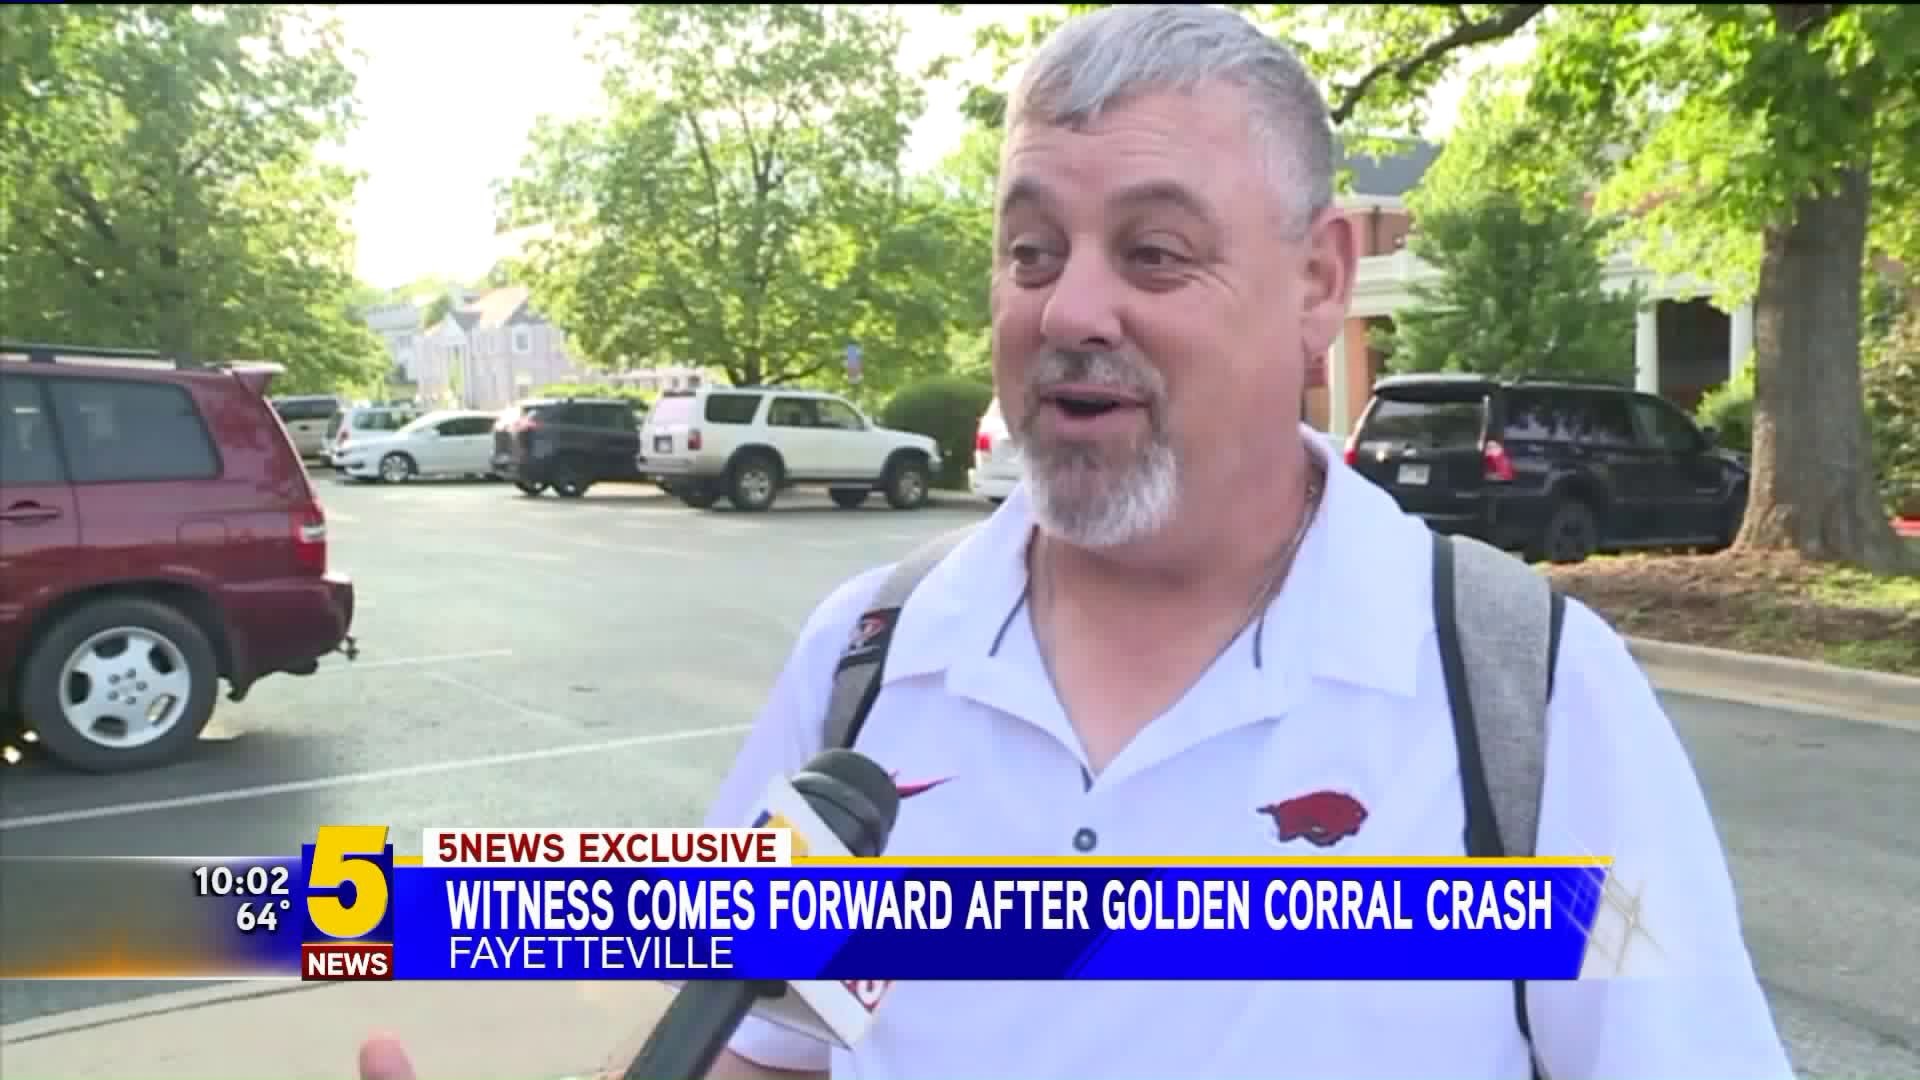 Witness Comes Forward After Golden Corral Crash In Fayetteville